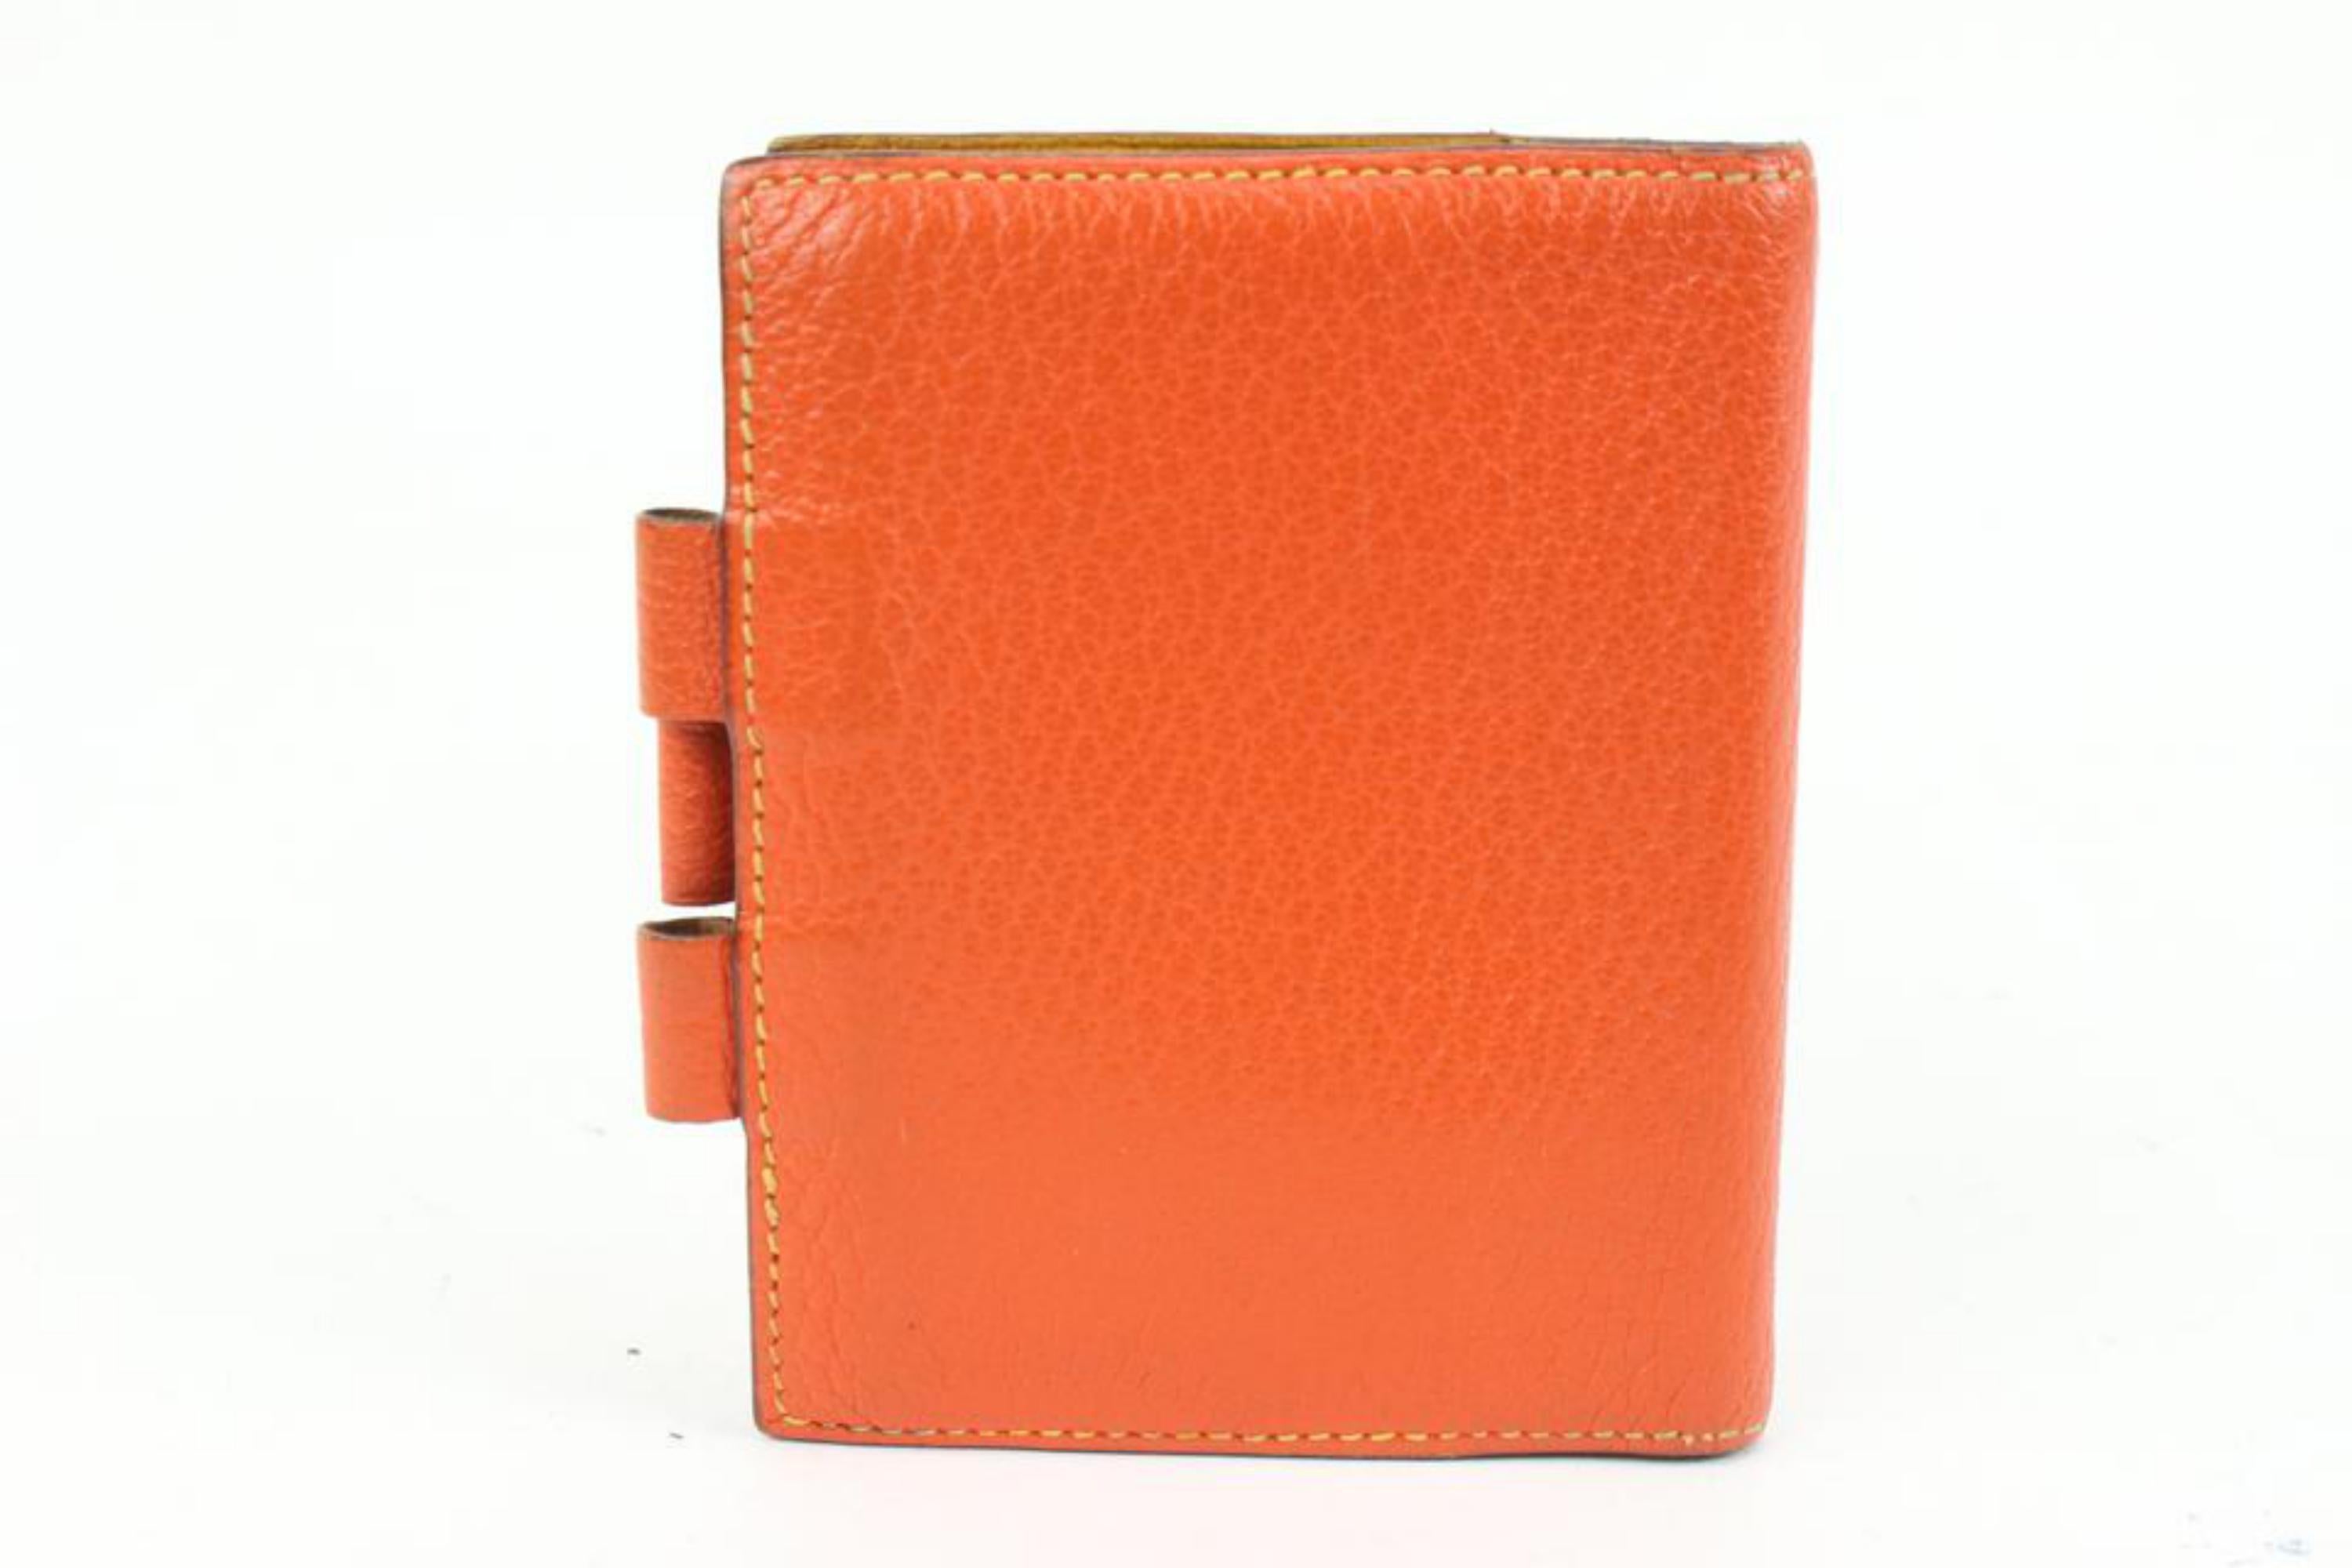 Hermès Orange Leather Globe Trotter Agenda Cover PM 11h426s For Sale 4